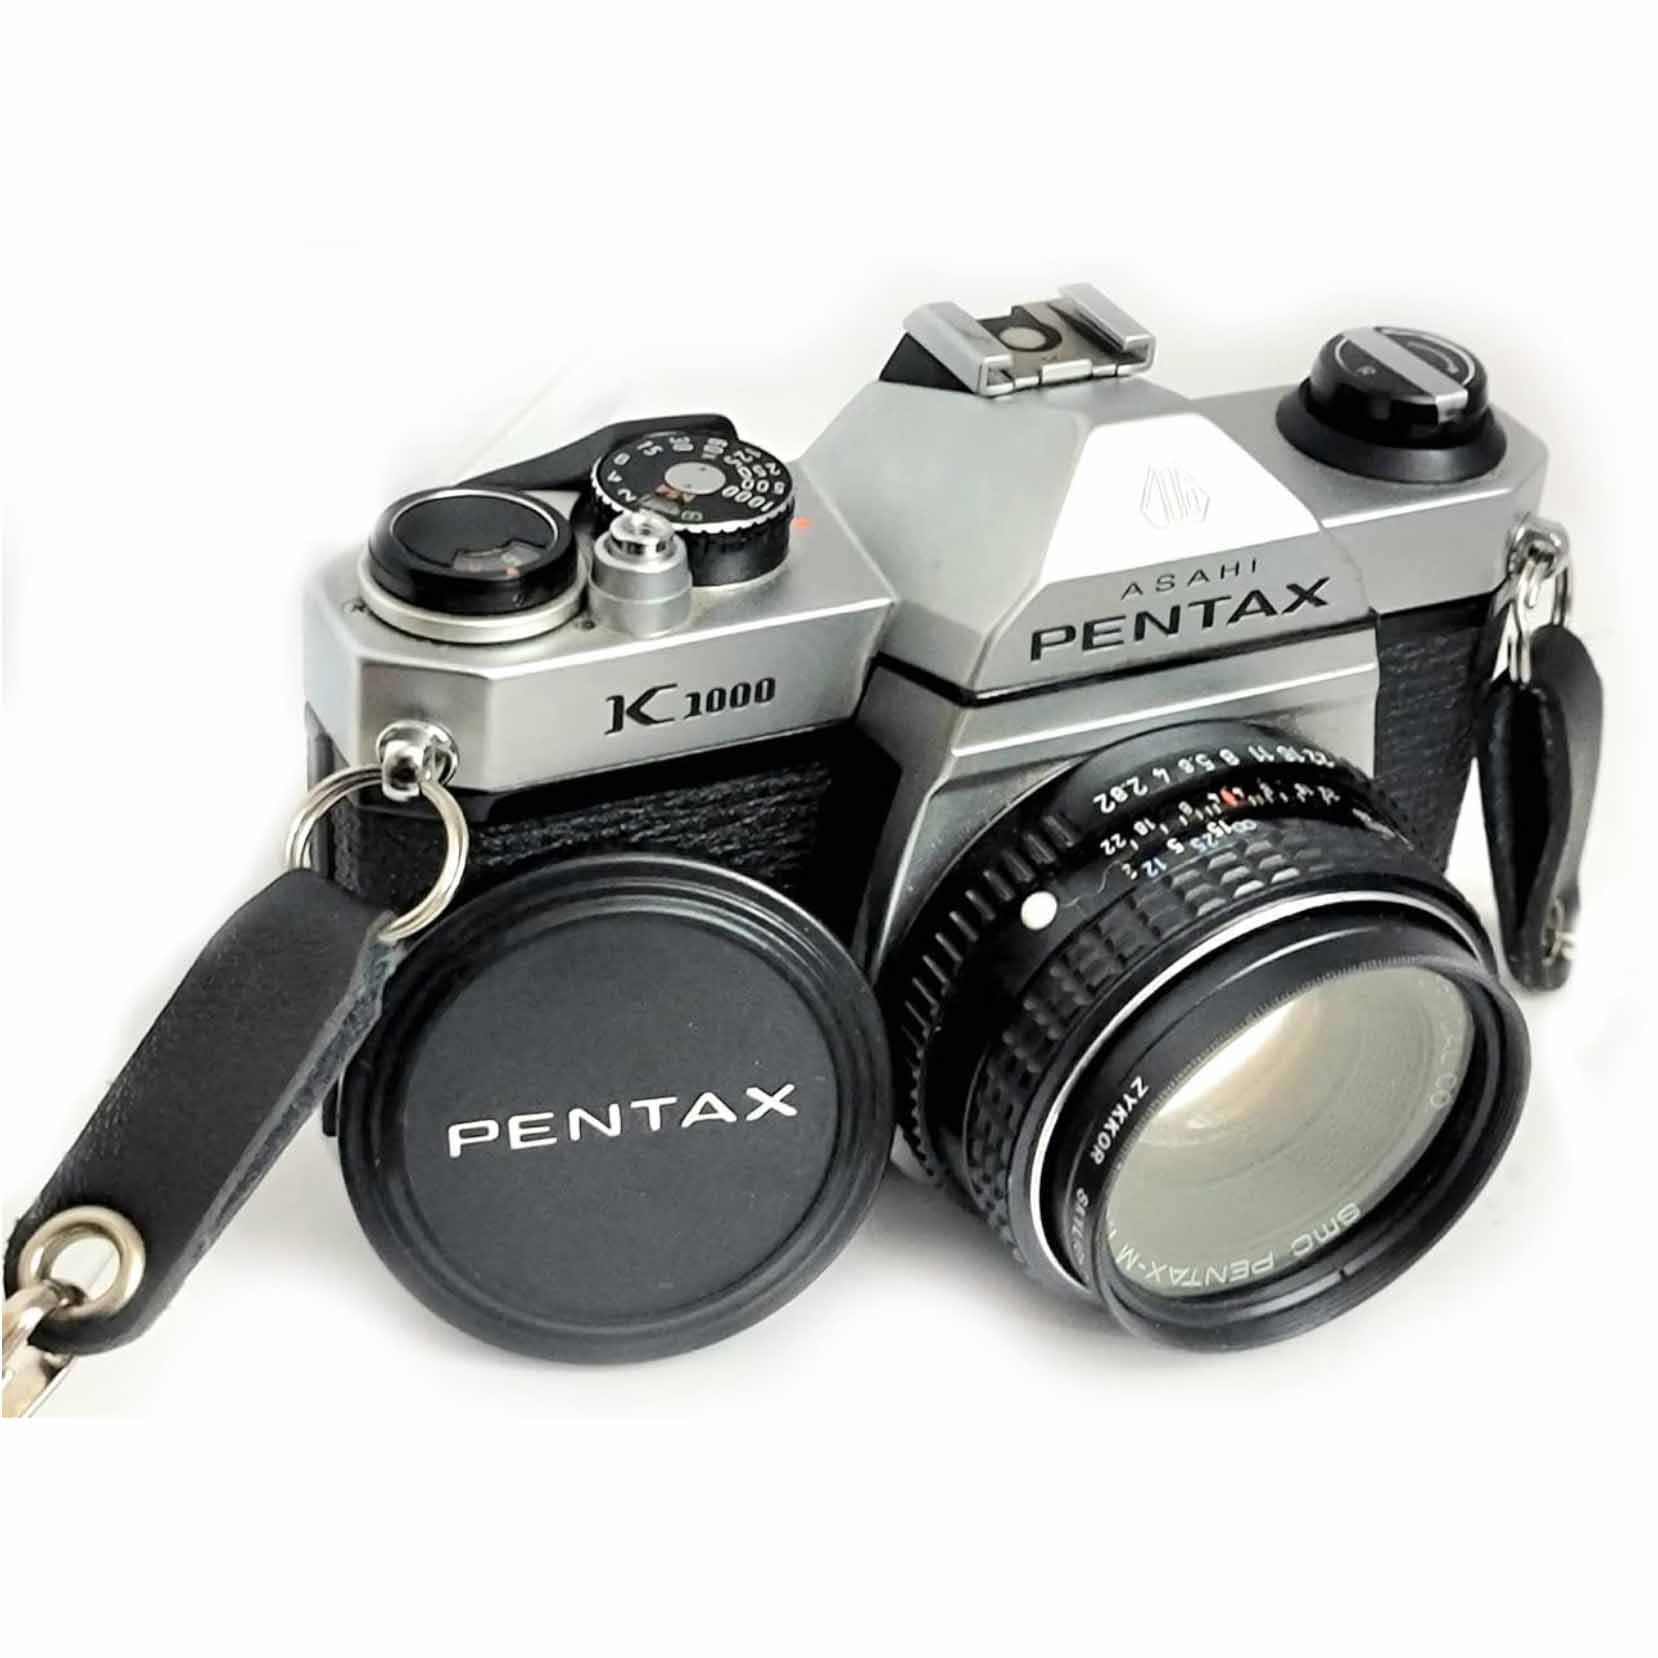 Pentax K1000 silver and black camera